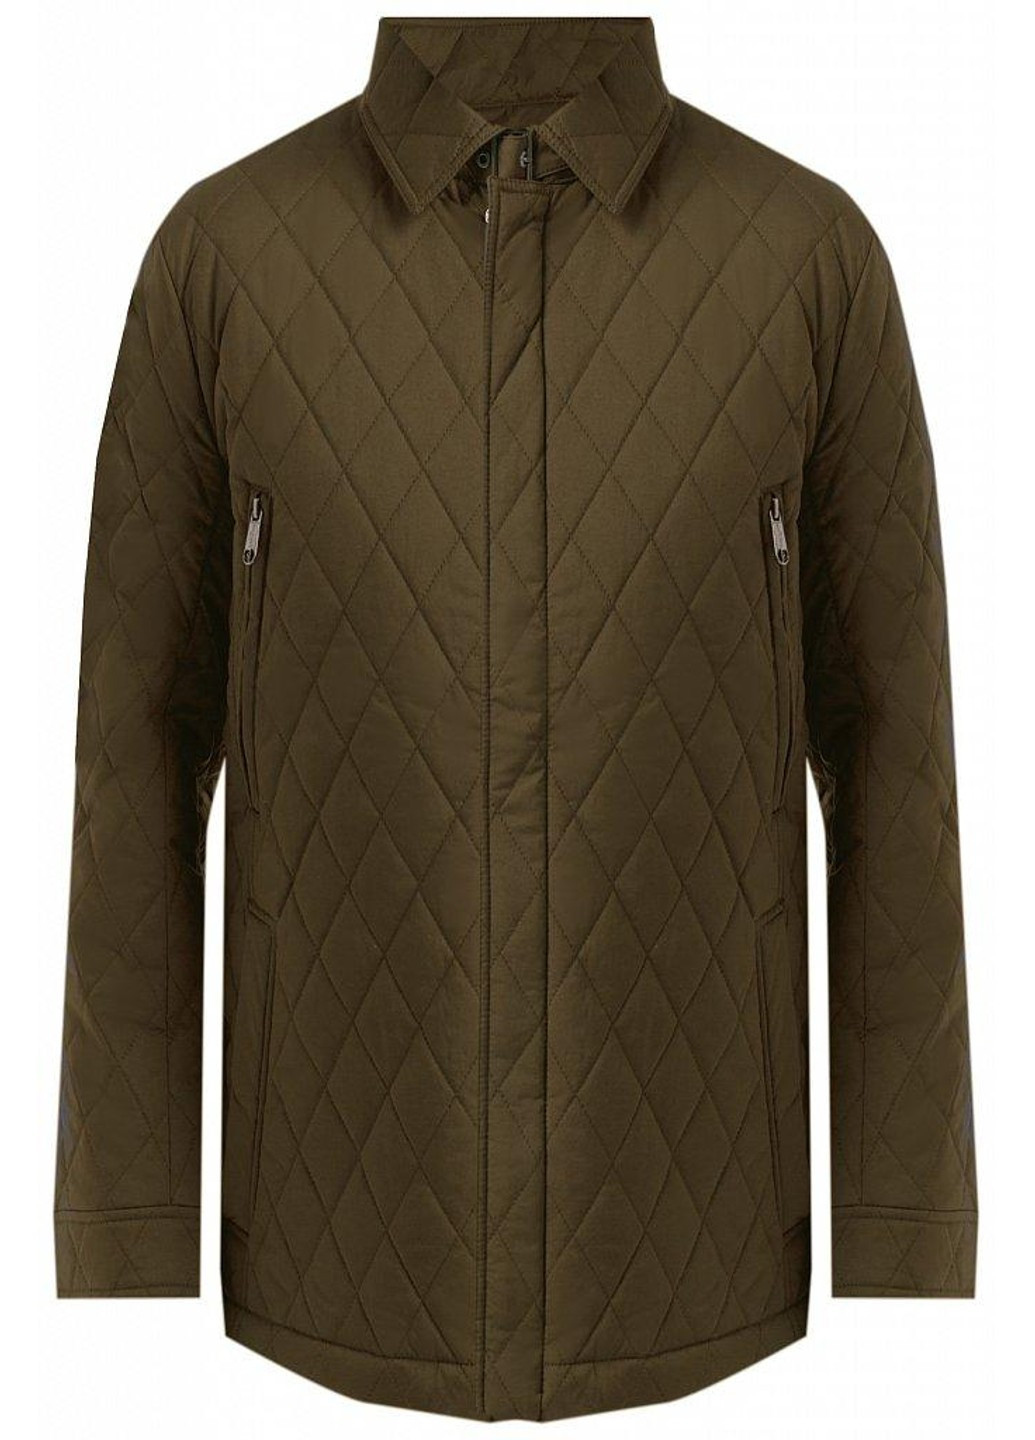 Зеленая демисезонная куртка a19-21003-905 Finn Flare